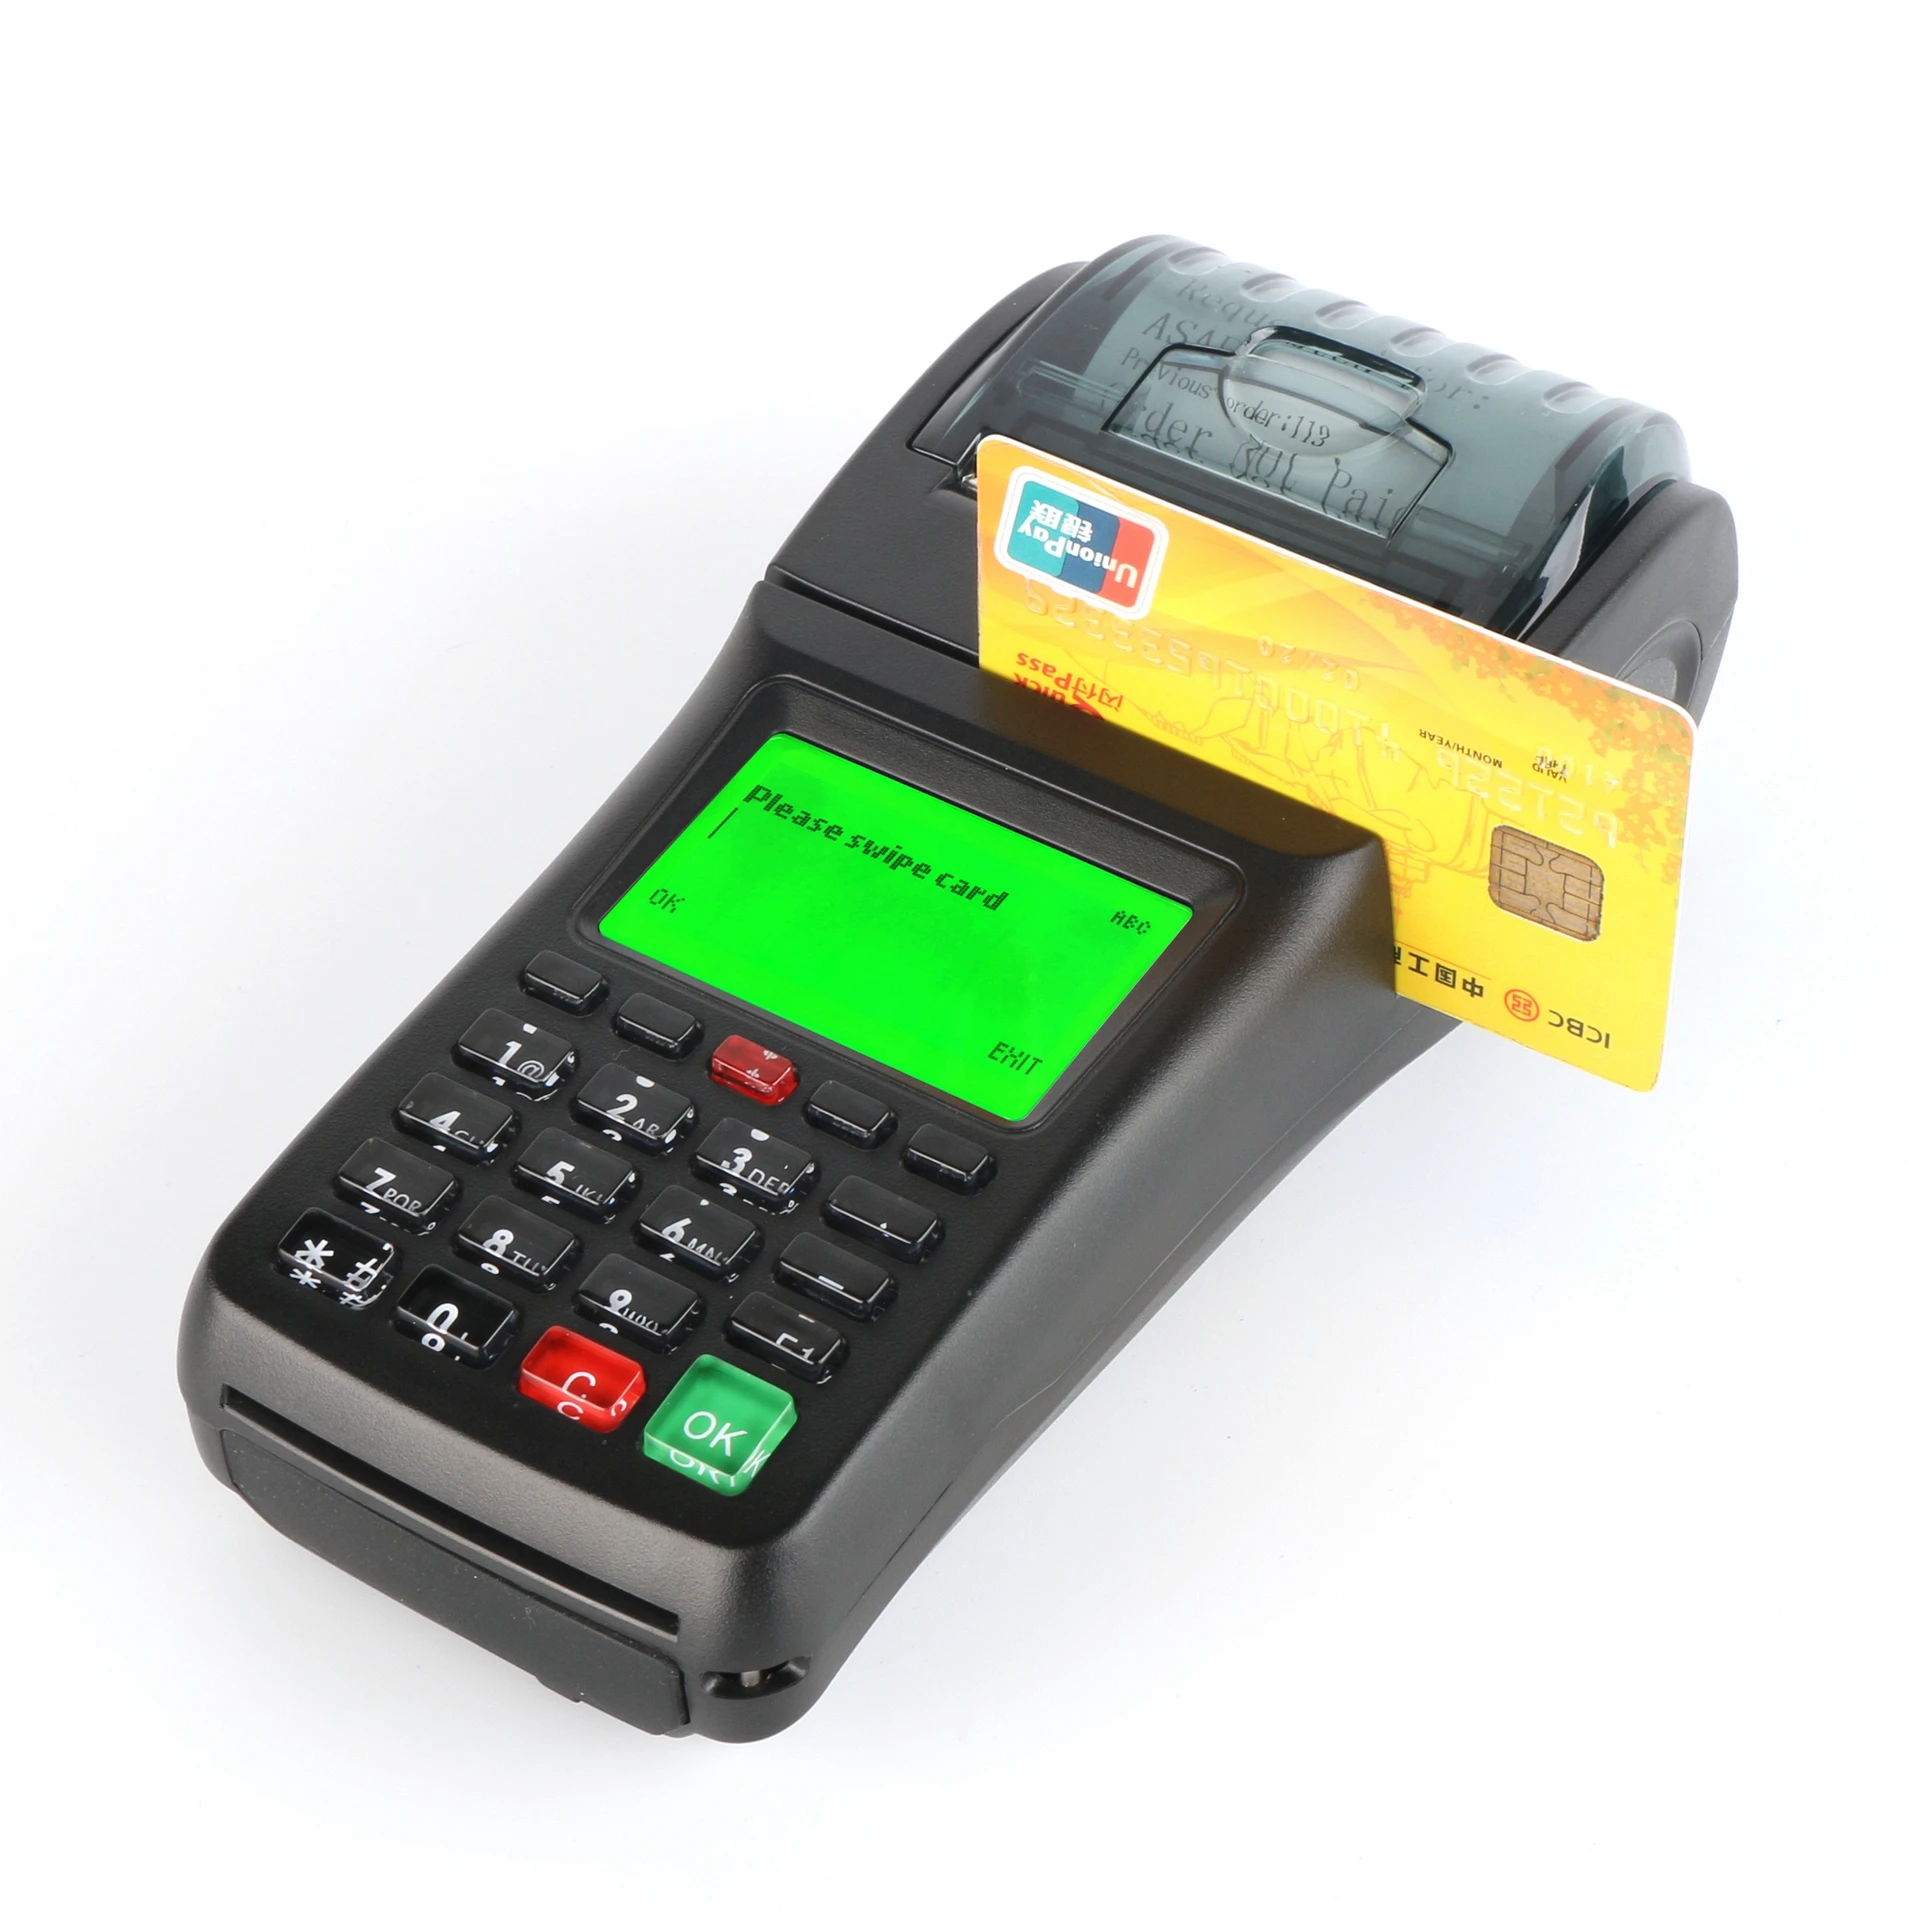 Handheld GPRS Sim Card thermal printer POS terminal with NFC reader